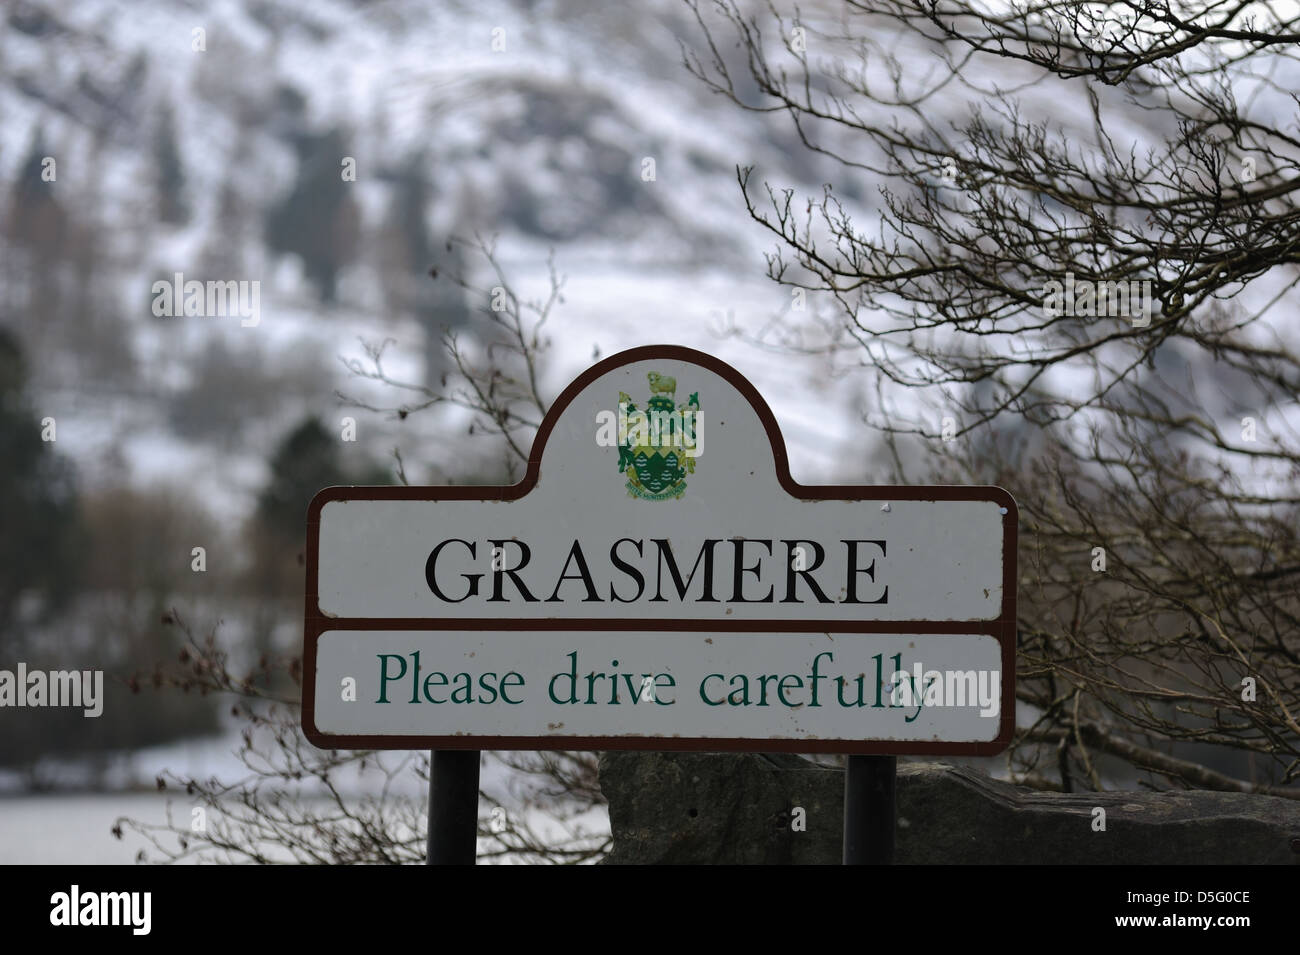 Grasmere , please drive carefully ! Stock Photo